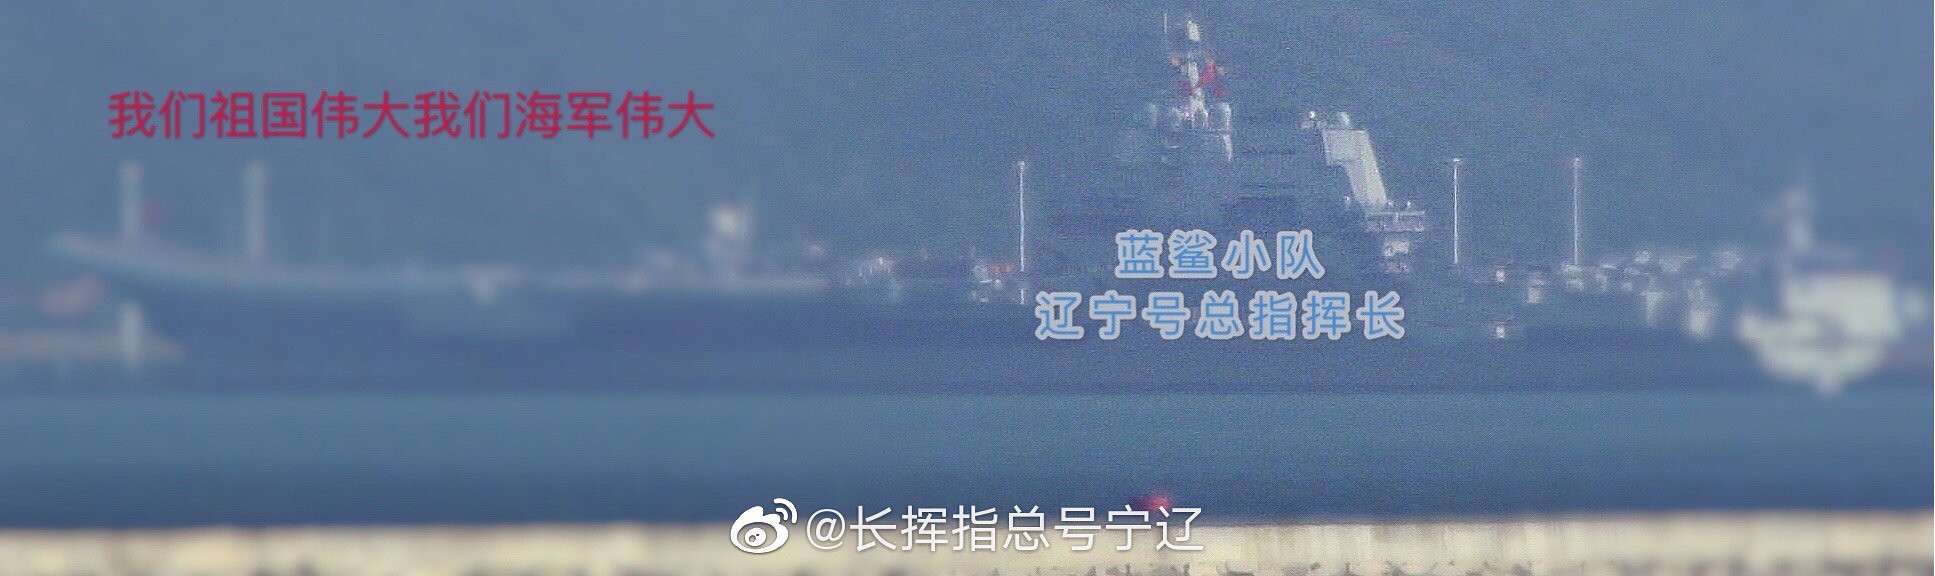 PLN Type 002 carrier - 20191120 at Yulin Naval Base.jpg